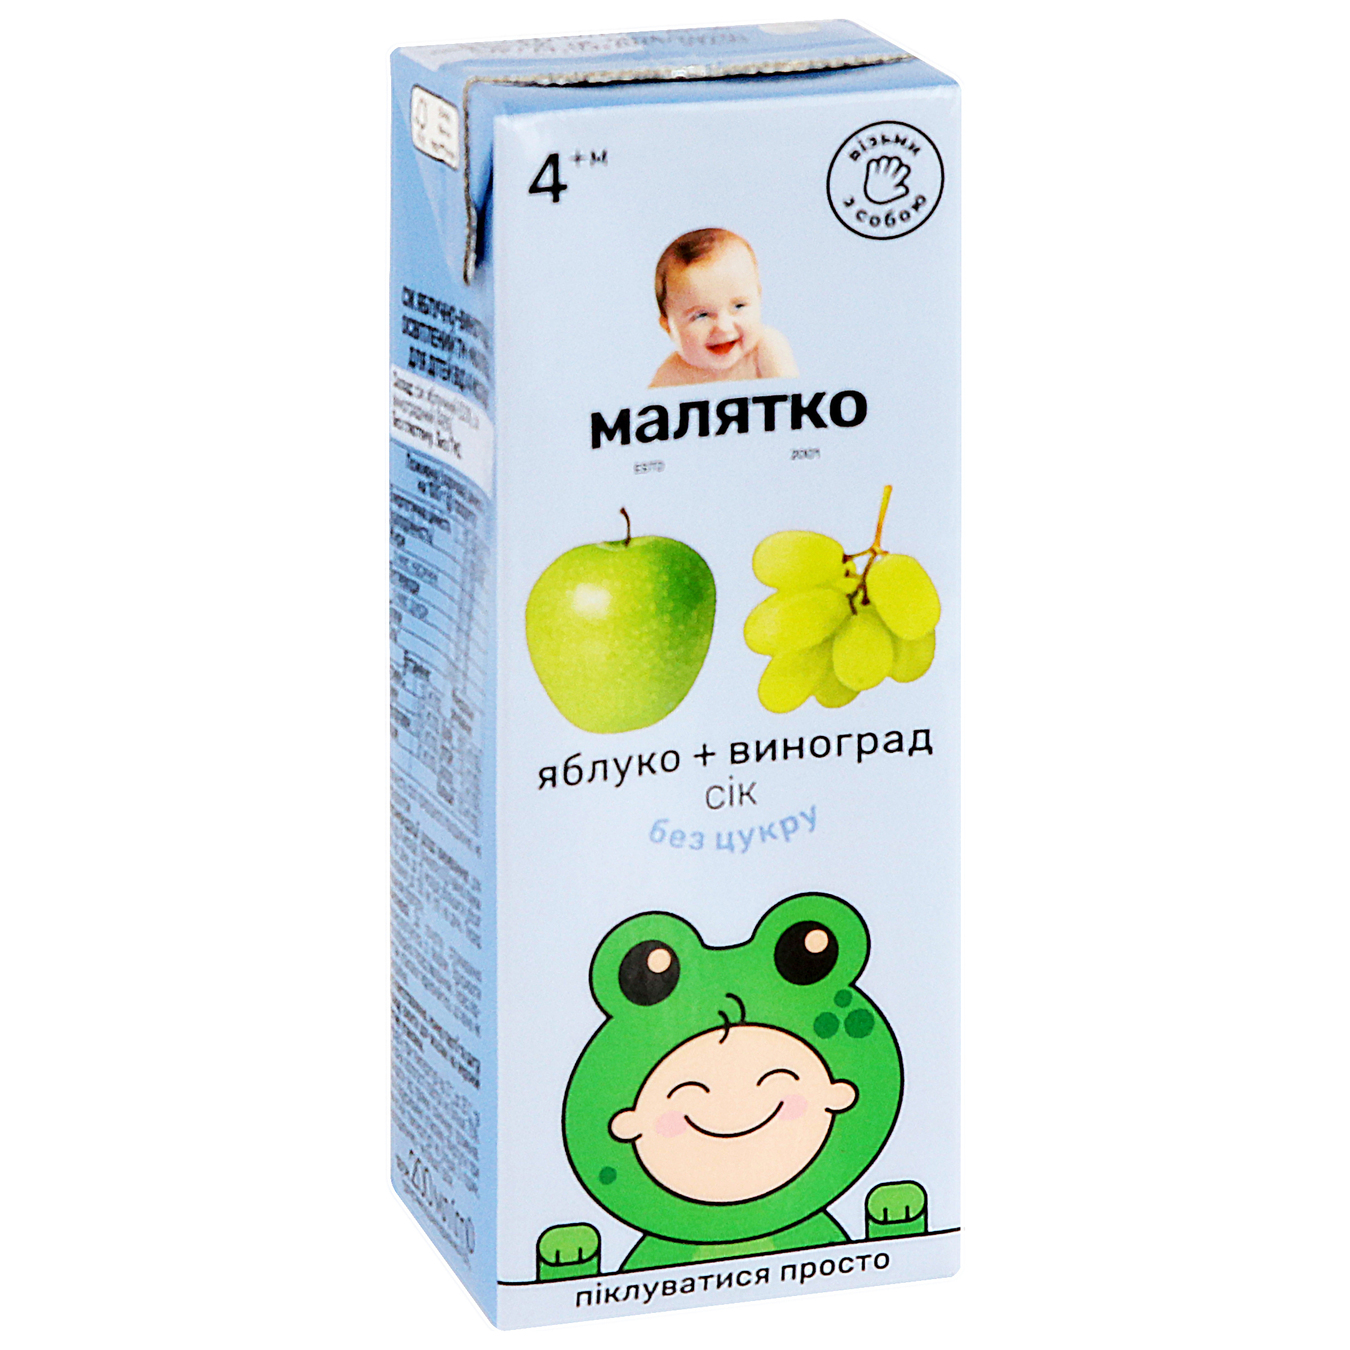 Malytko apple-grape juice 175ml 2